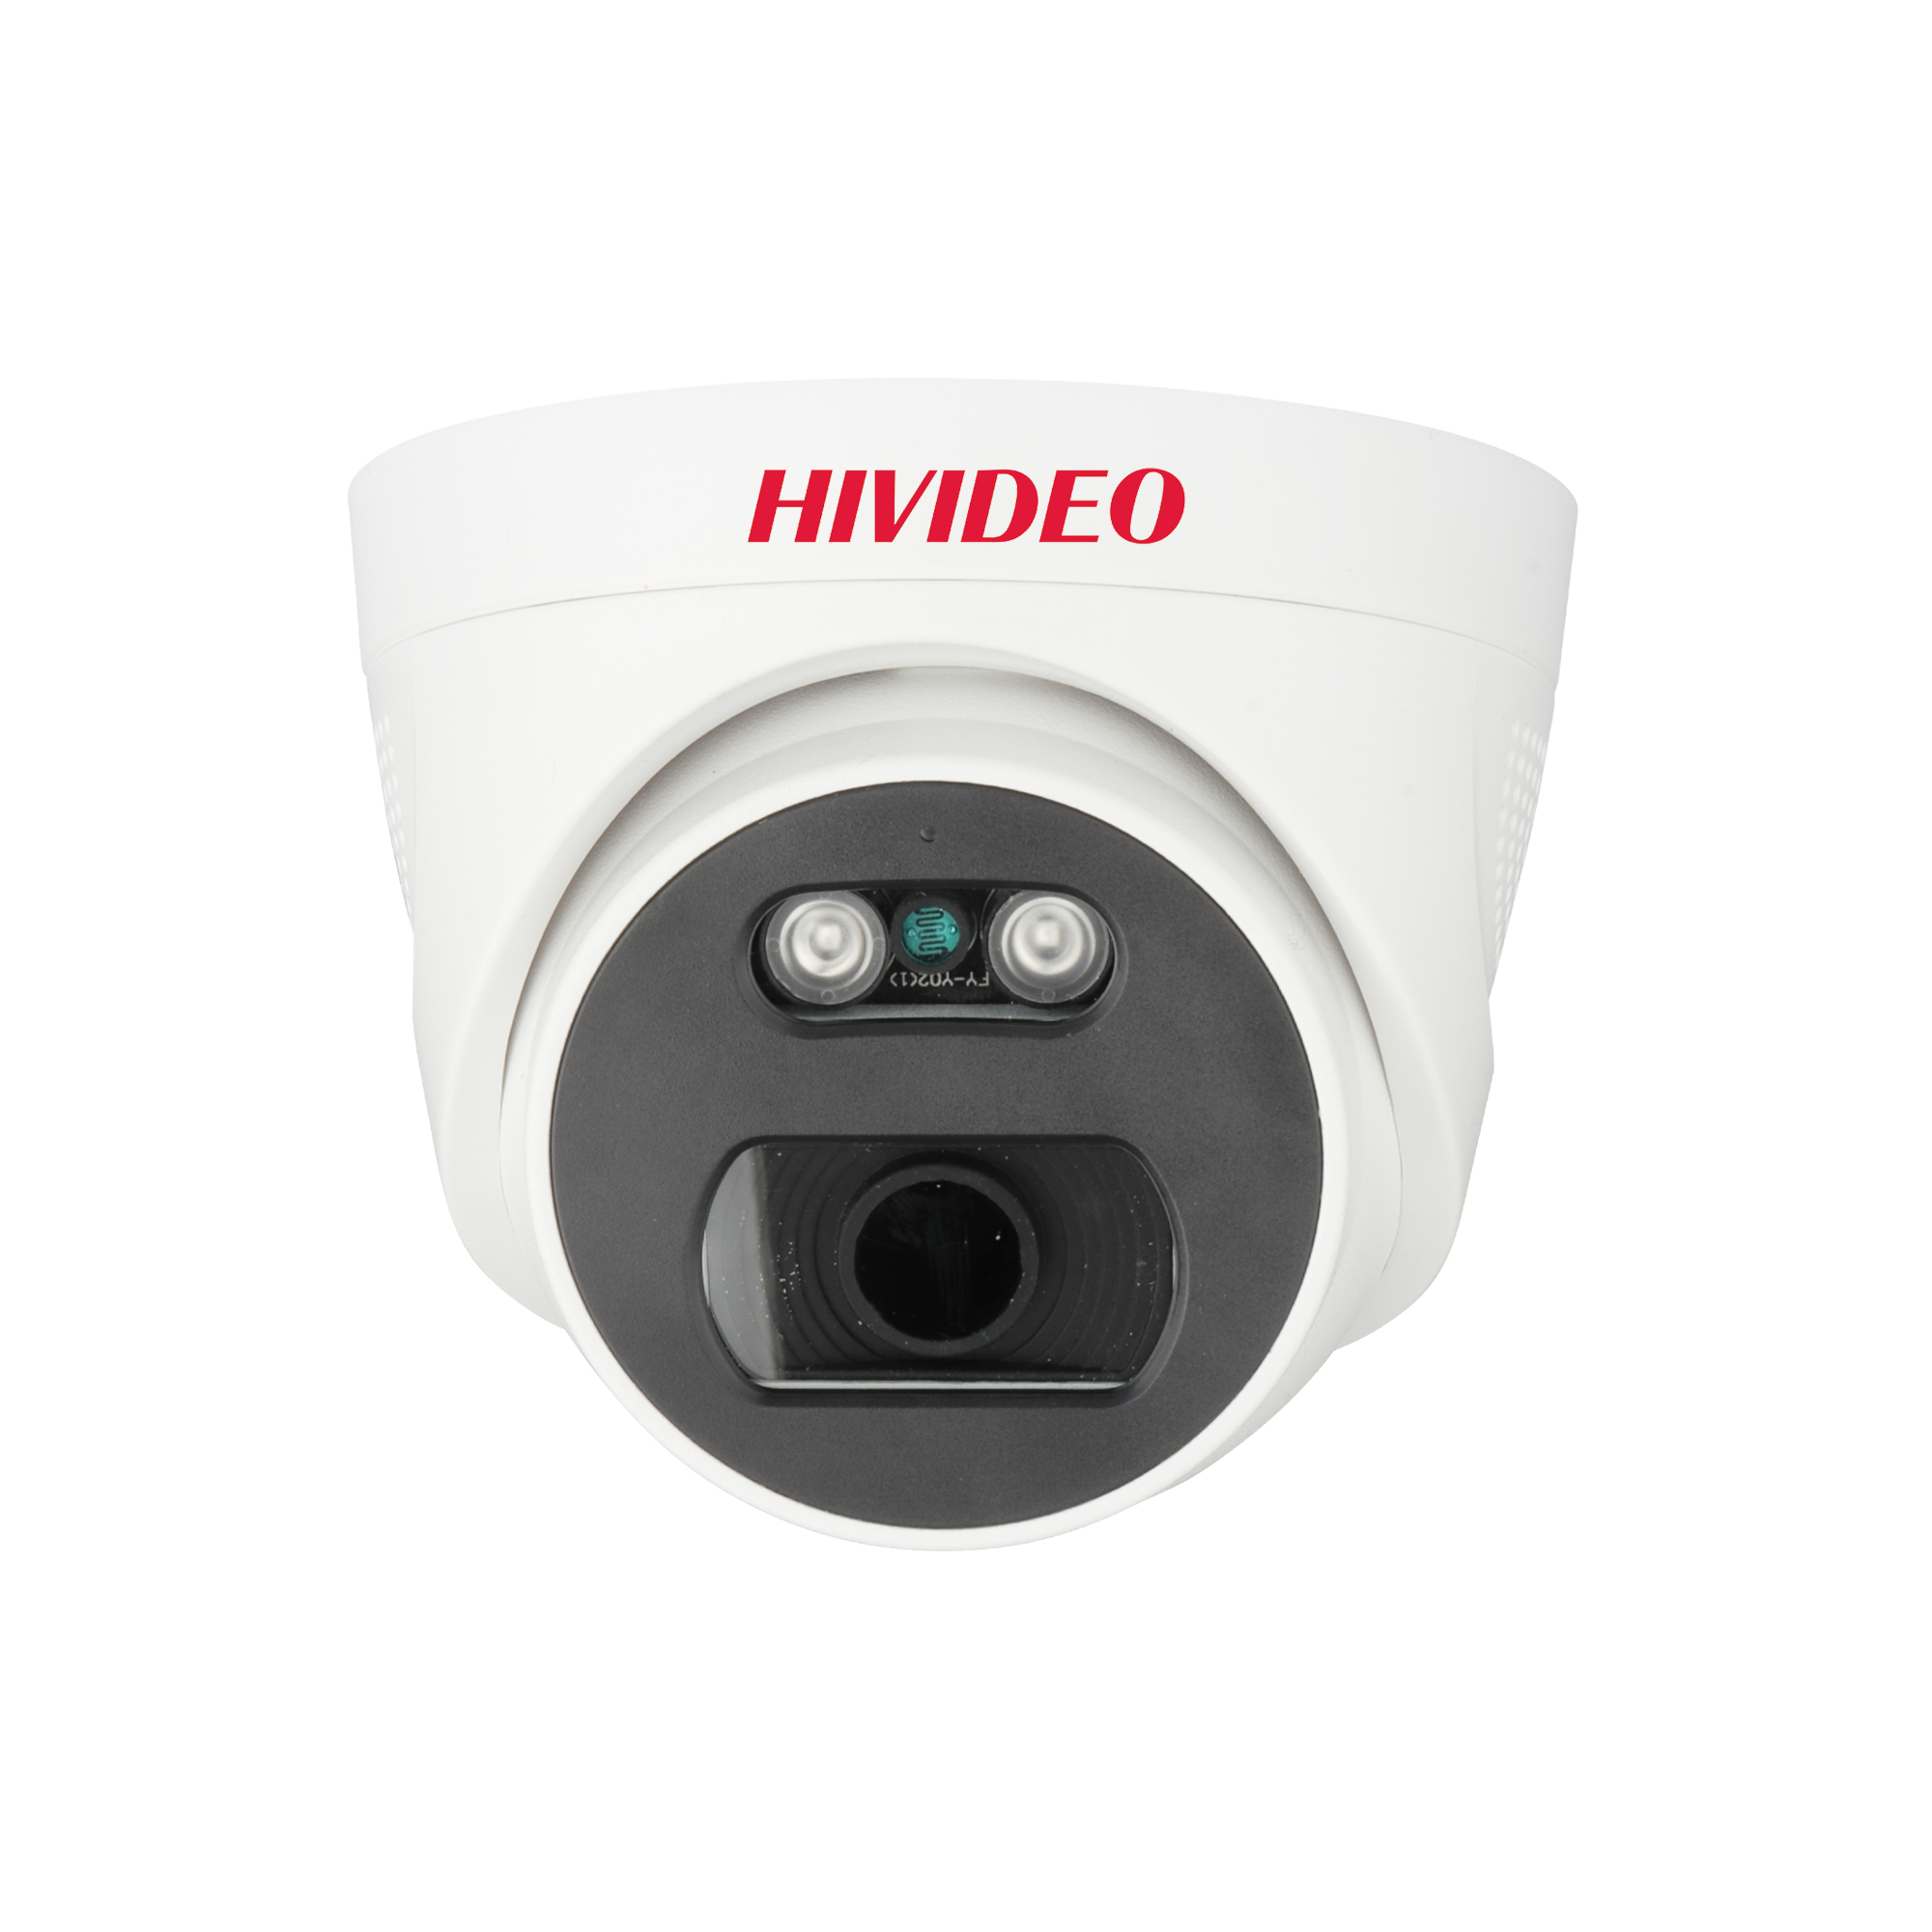 دوربین مداربسته دام HIVIDEO مدل HI-D73605